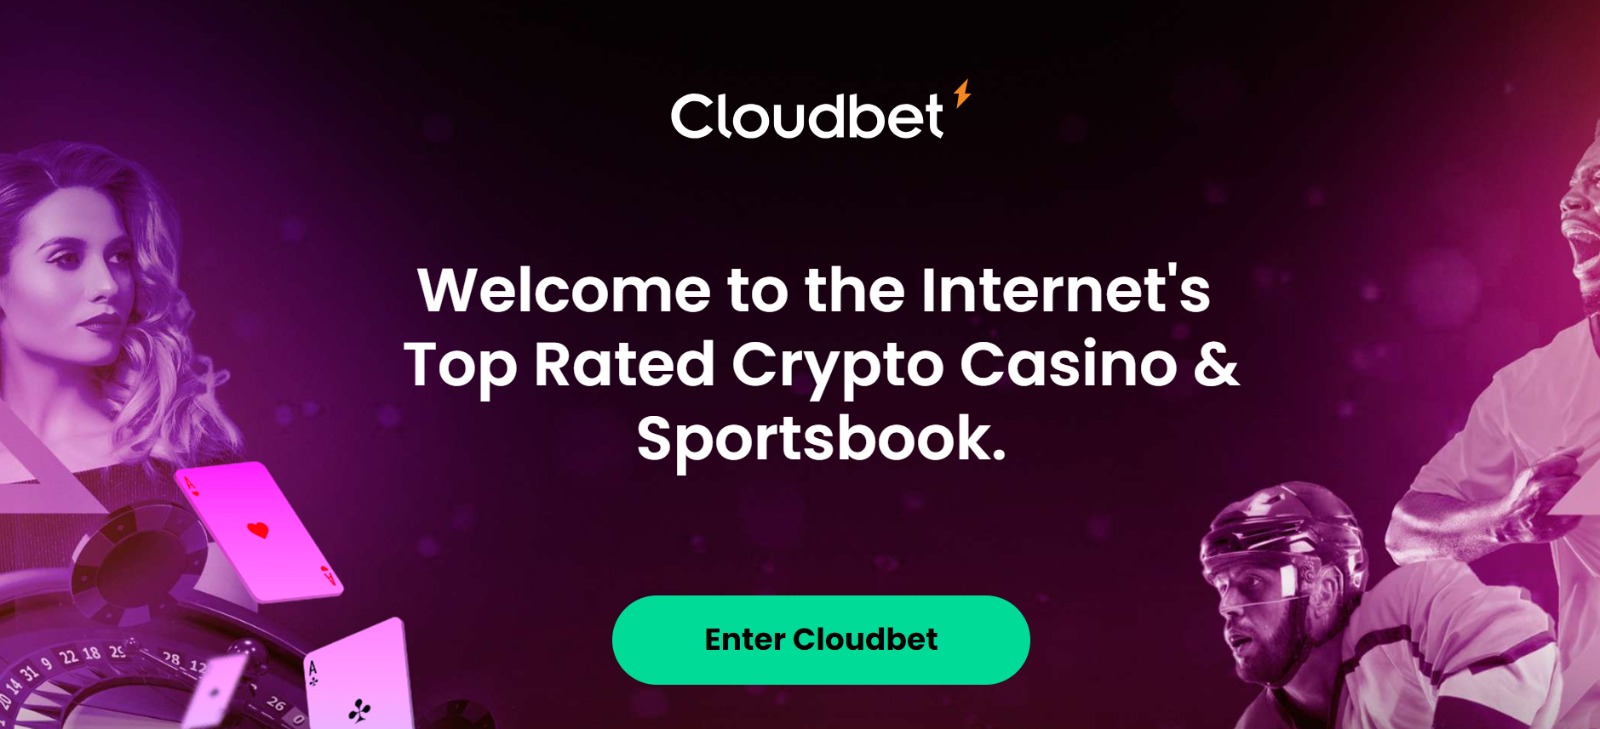 Cloudbet Bitcoin Baccarat Casino